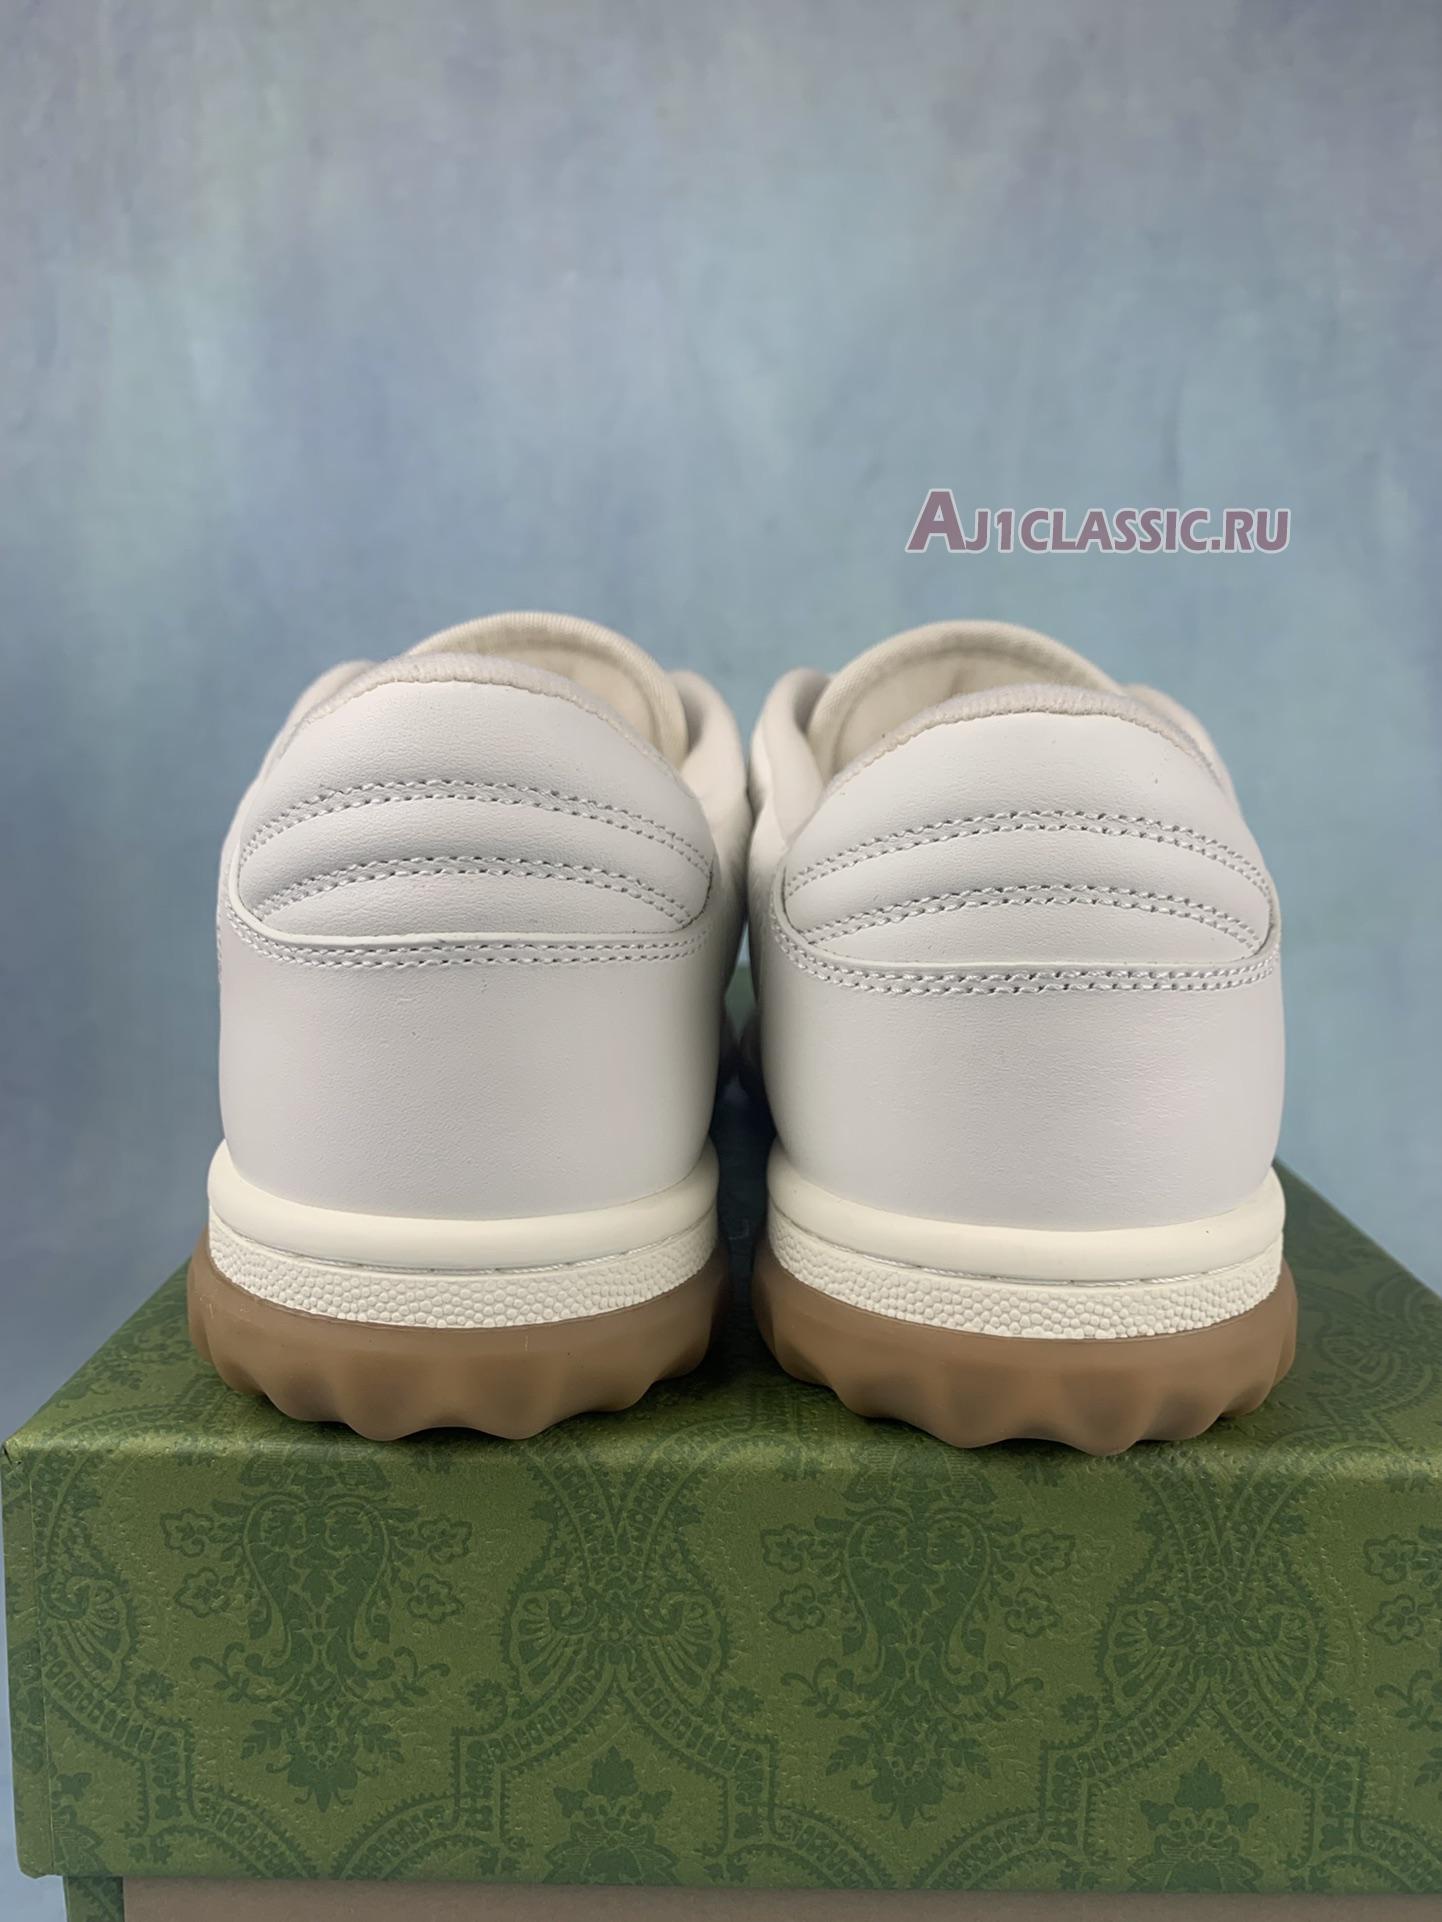 Gucci MAC80 Sneaker "Off White Gum" 747954 AAB8C 9110